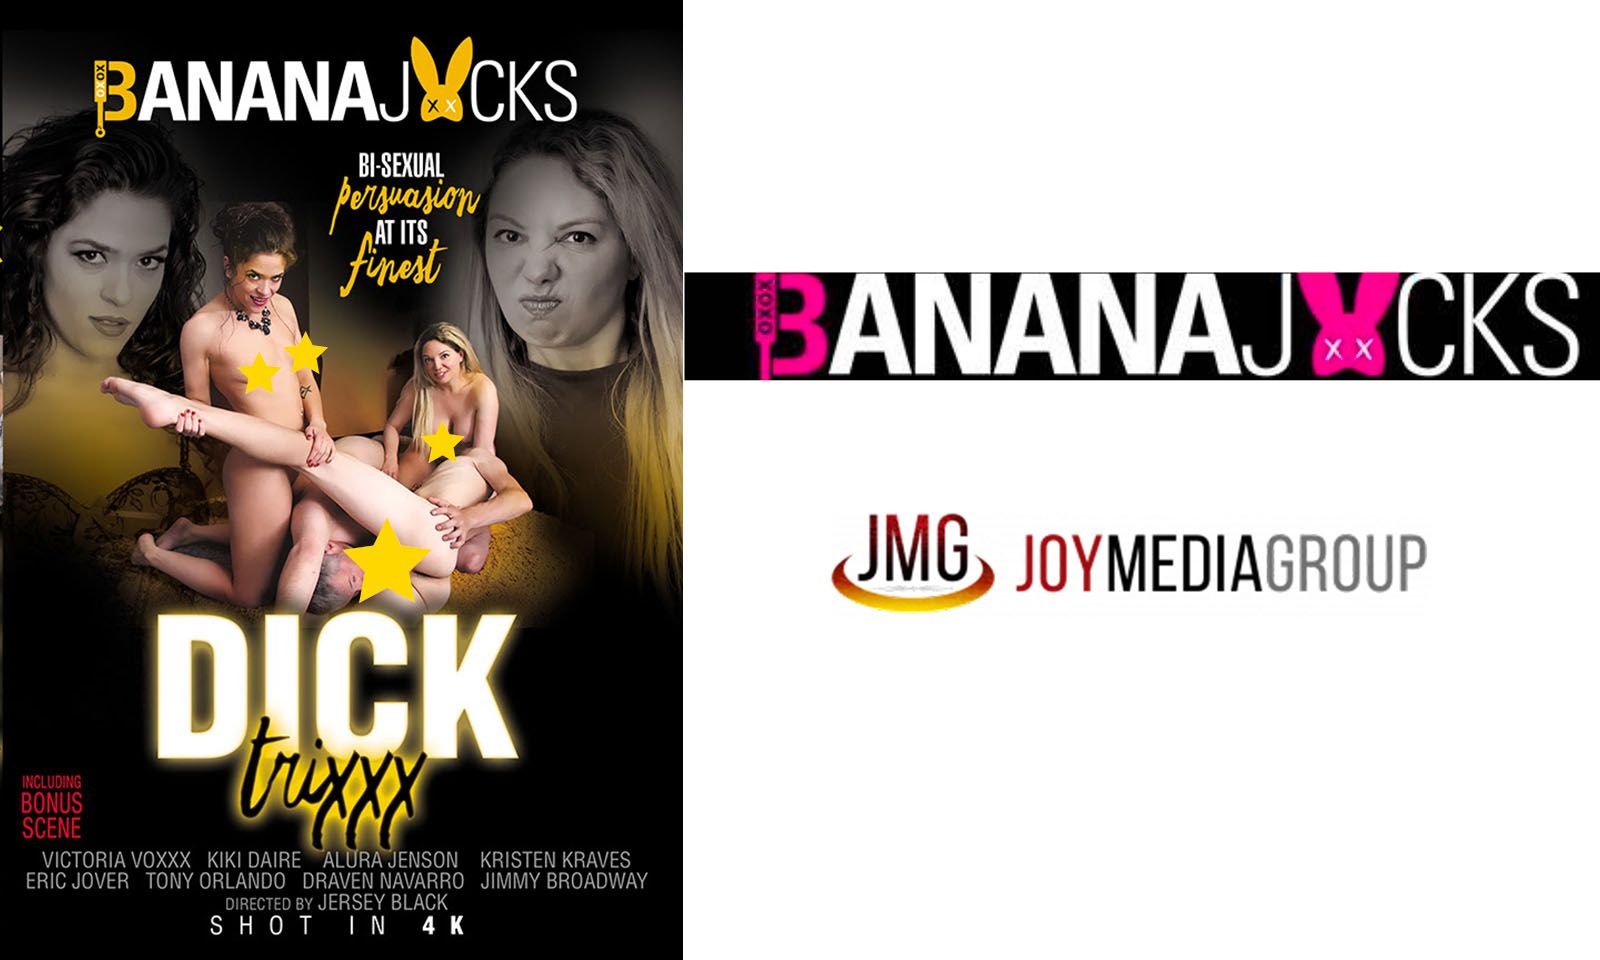 Joy Media Group Is Banana Jacks' Exclusive DVD Distributor